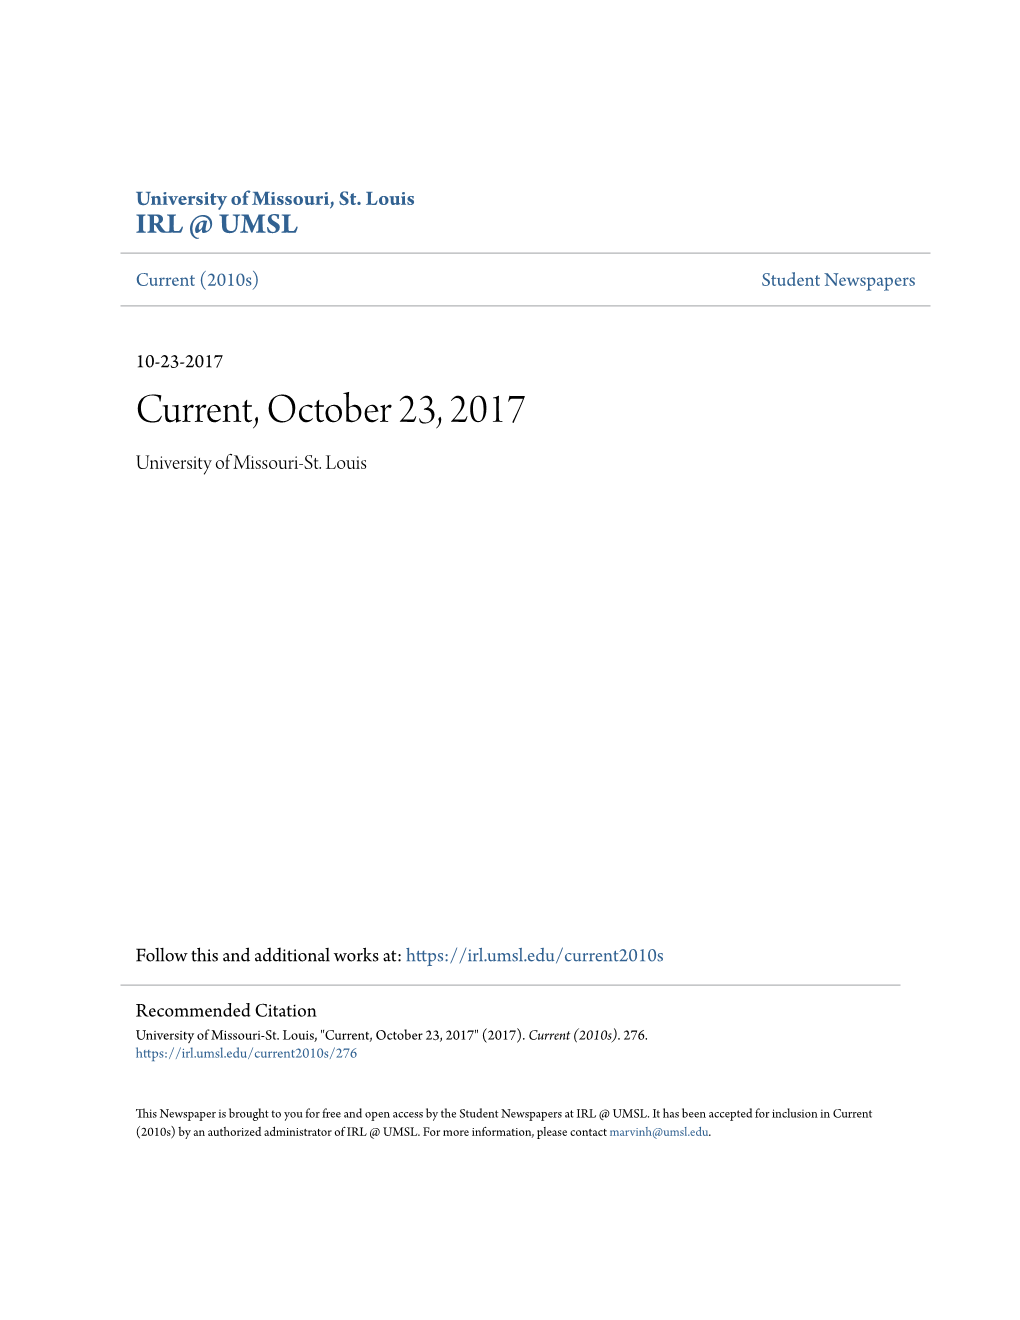 Current, October 23, 2017 University of Missouri-St